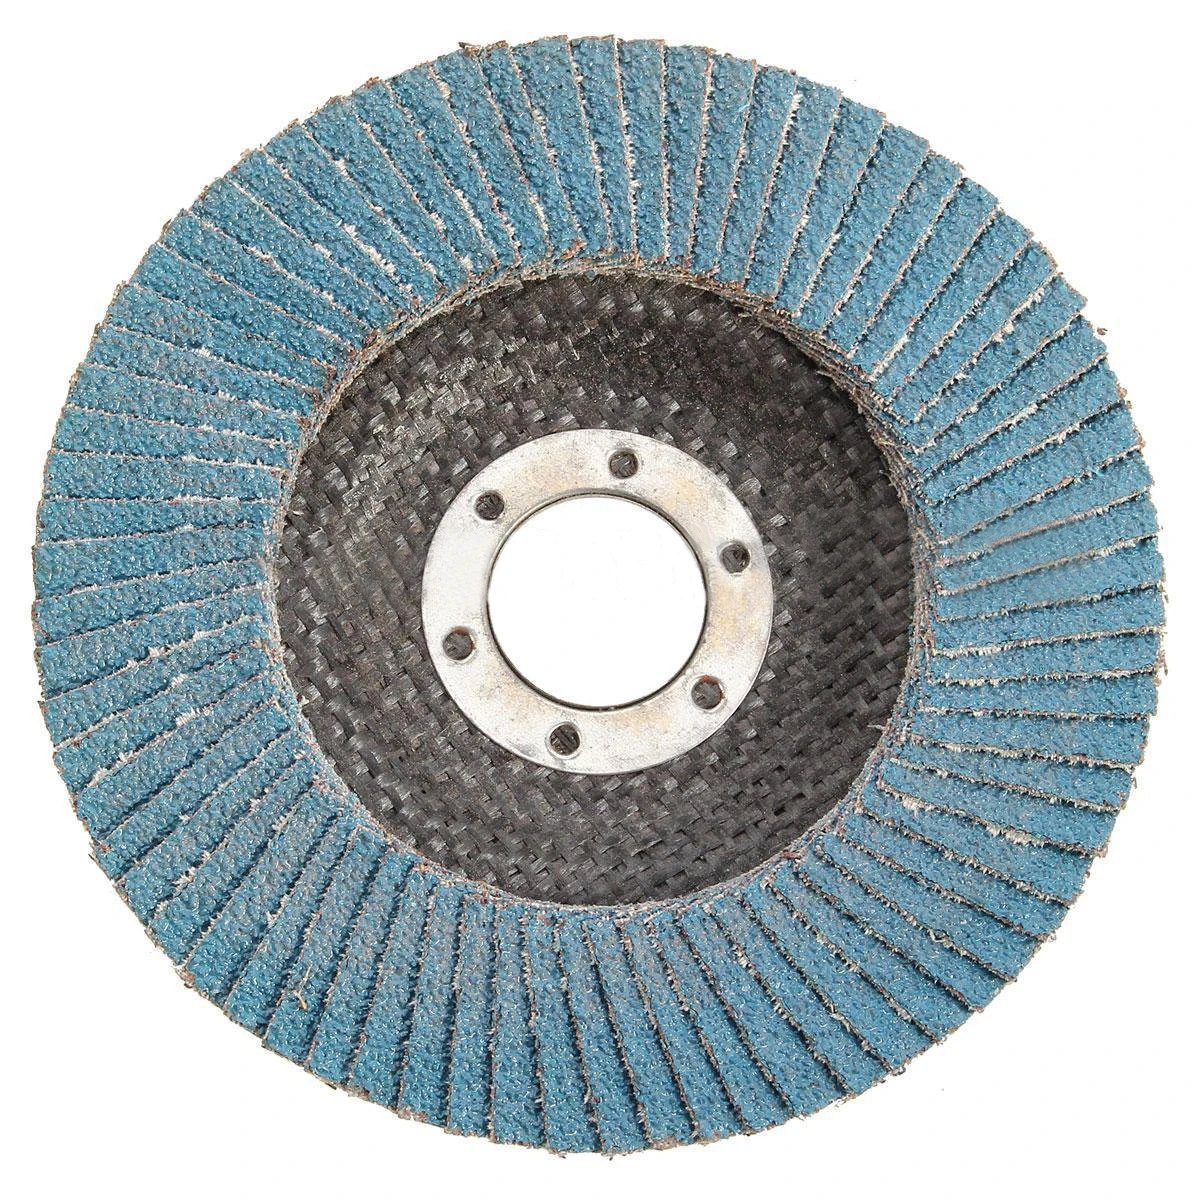 10pcs/lots 115mm 4-1/2" * 7/8" Premium Zirconia Grinding Wheel Flap Disc 40 Grit